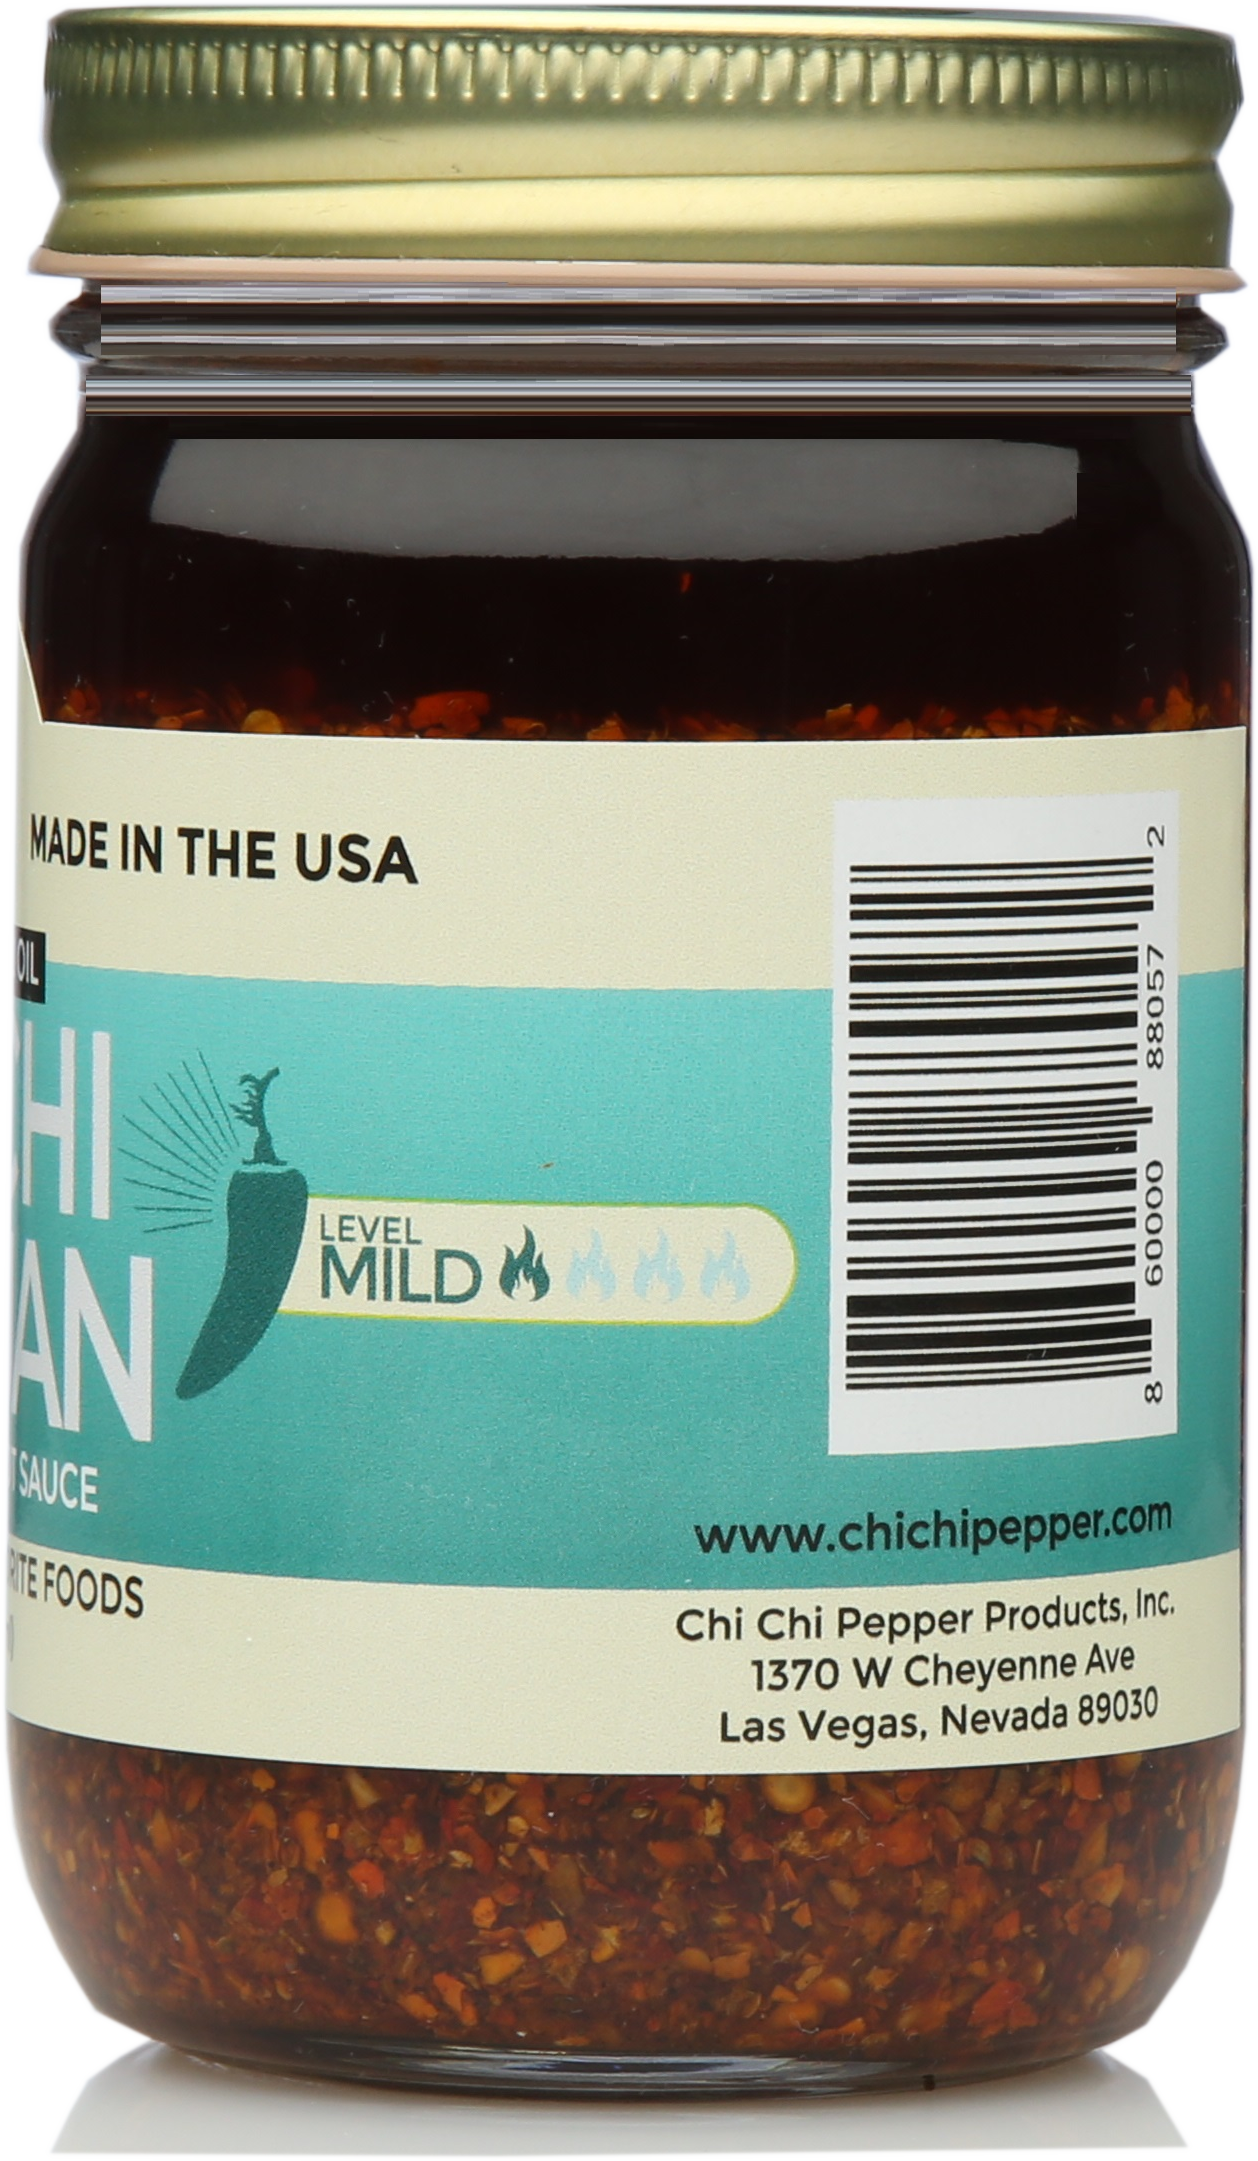 Chi Chi Sichuan - All Natural Premium Crunchy Chili Oil Condiment With Olive Oil Garlic & Tingly Mala Sichuan Peppercorn (Mild) 12 OZ